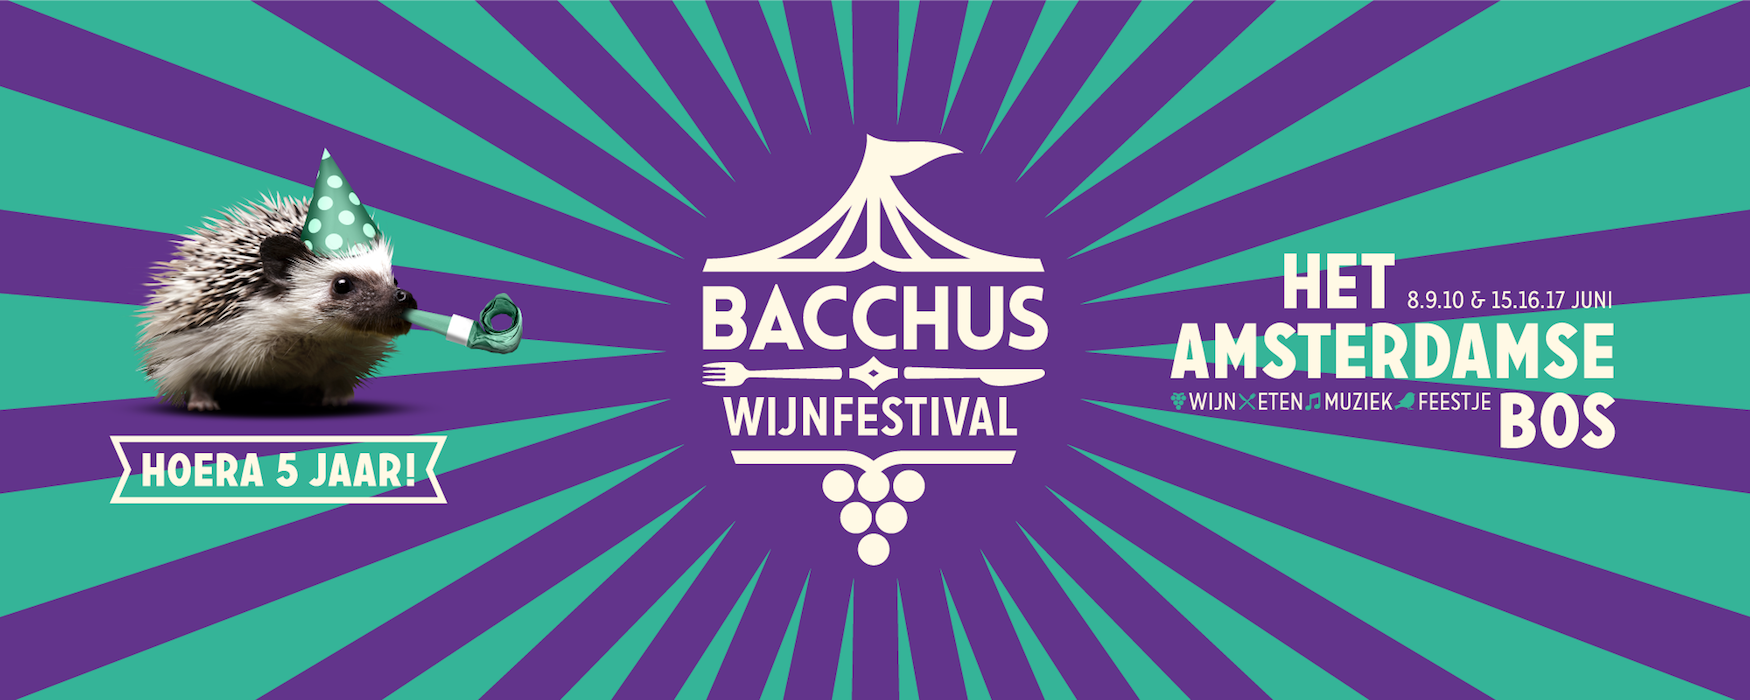 Bacchus wijnfestival 2018